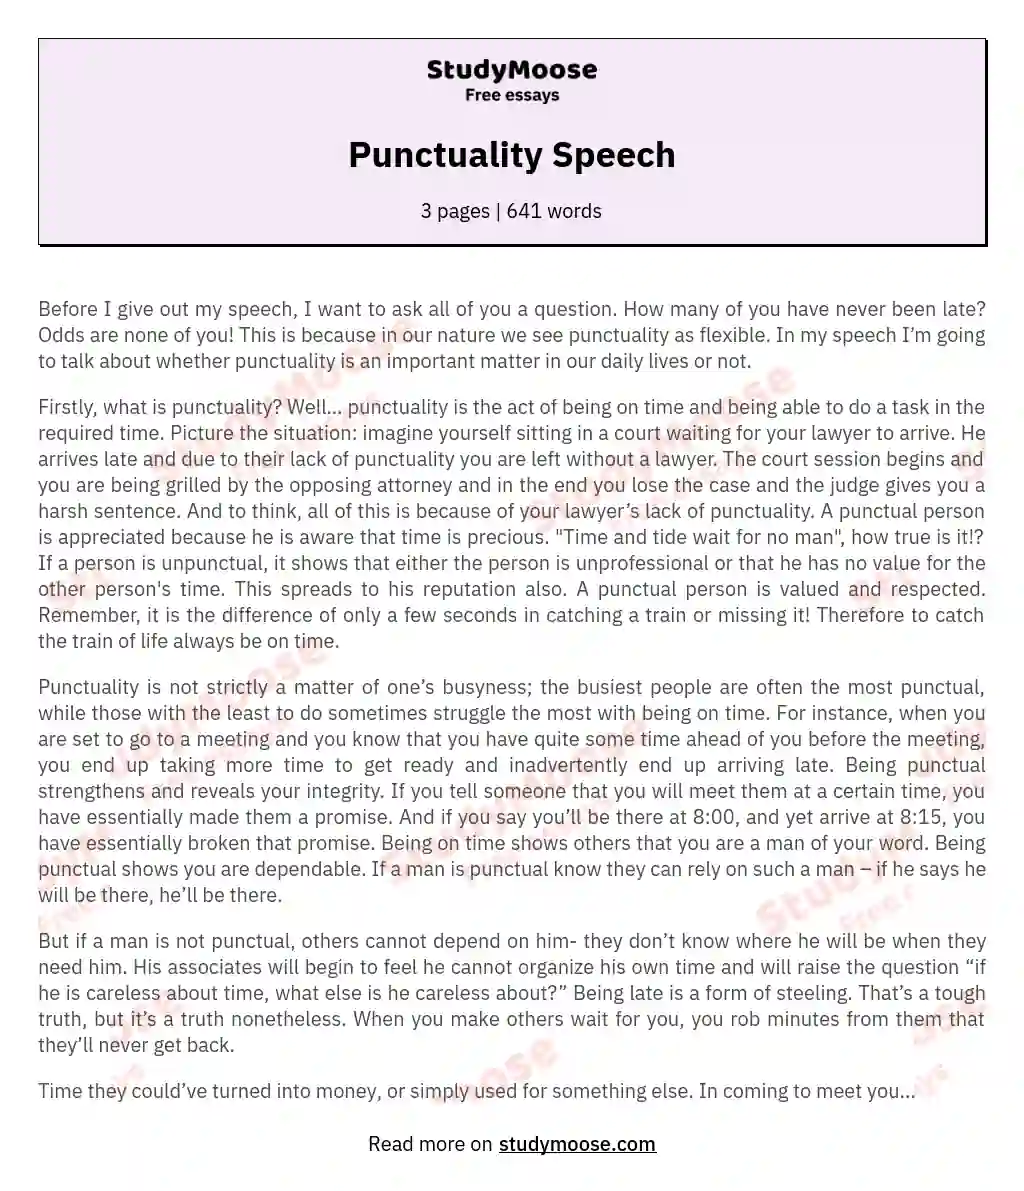 Punctuality Speech essay